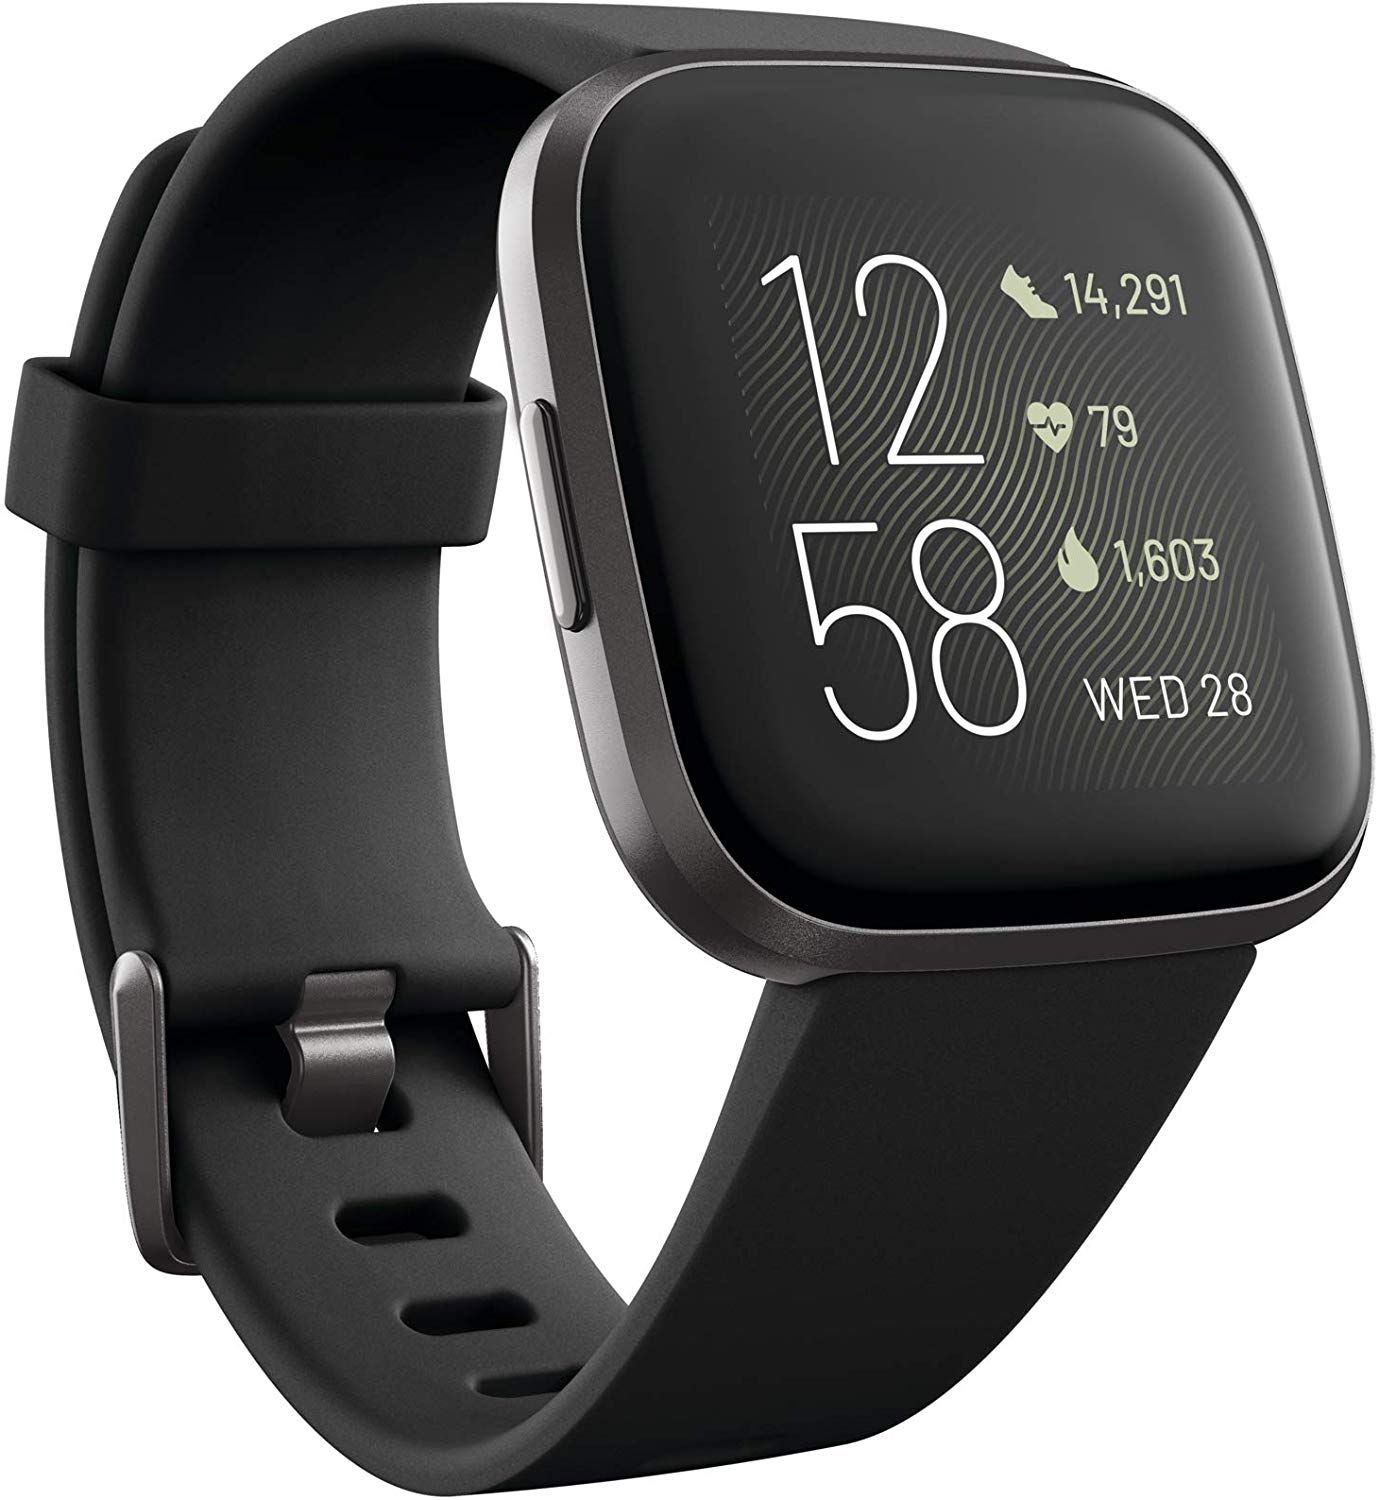 Fitbit Versa 2 Smartwatch (Black) is a good activity tracker